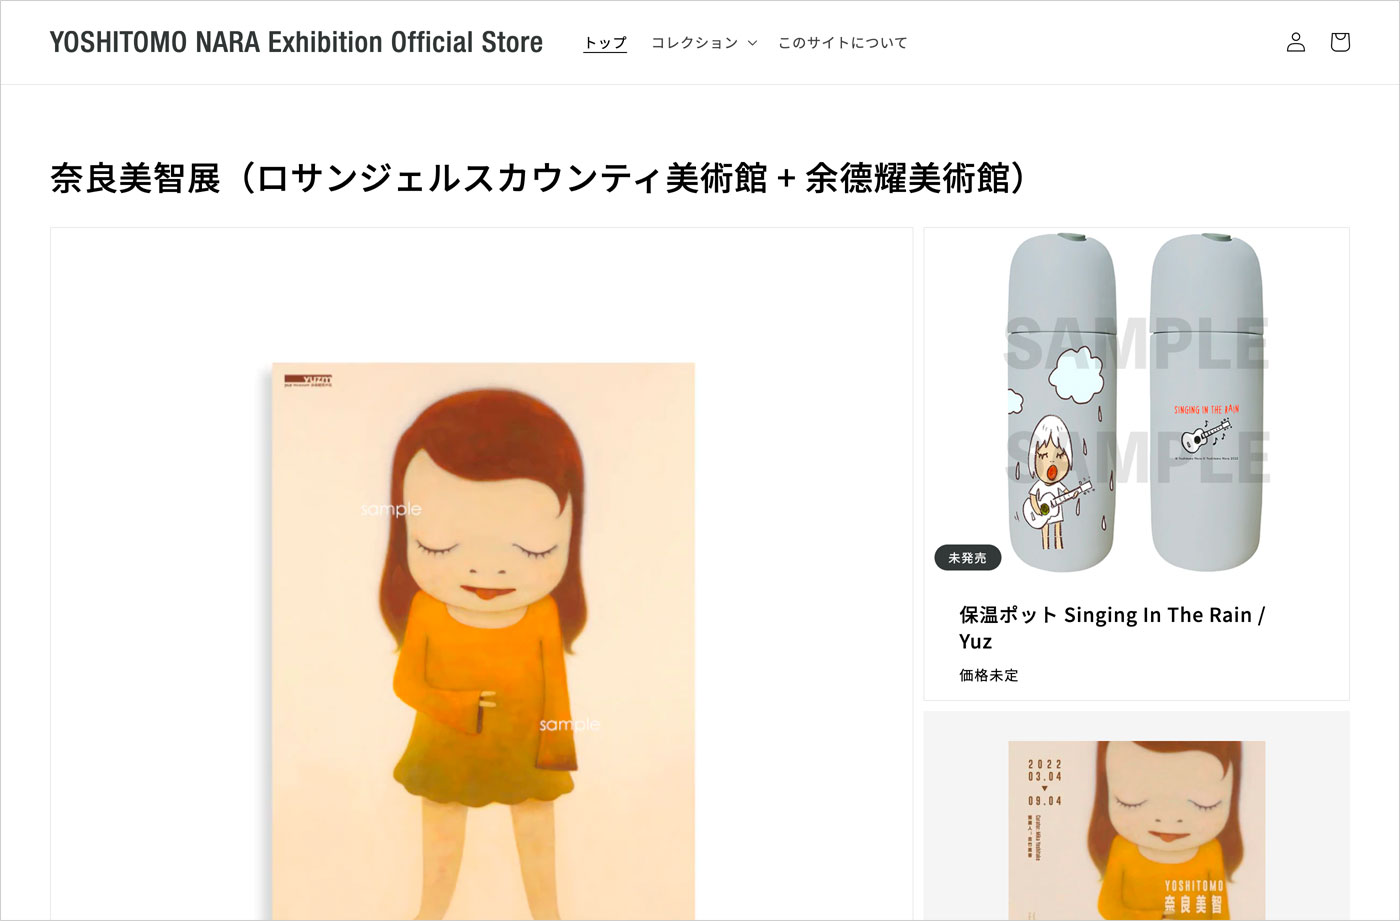 YOSHITOMO NARA Exhibition Official Storeウェブサイトの画面キャプチャ画像